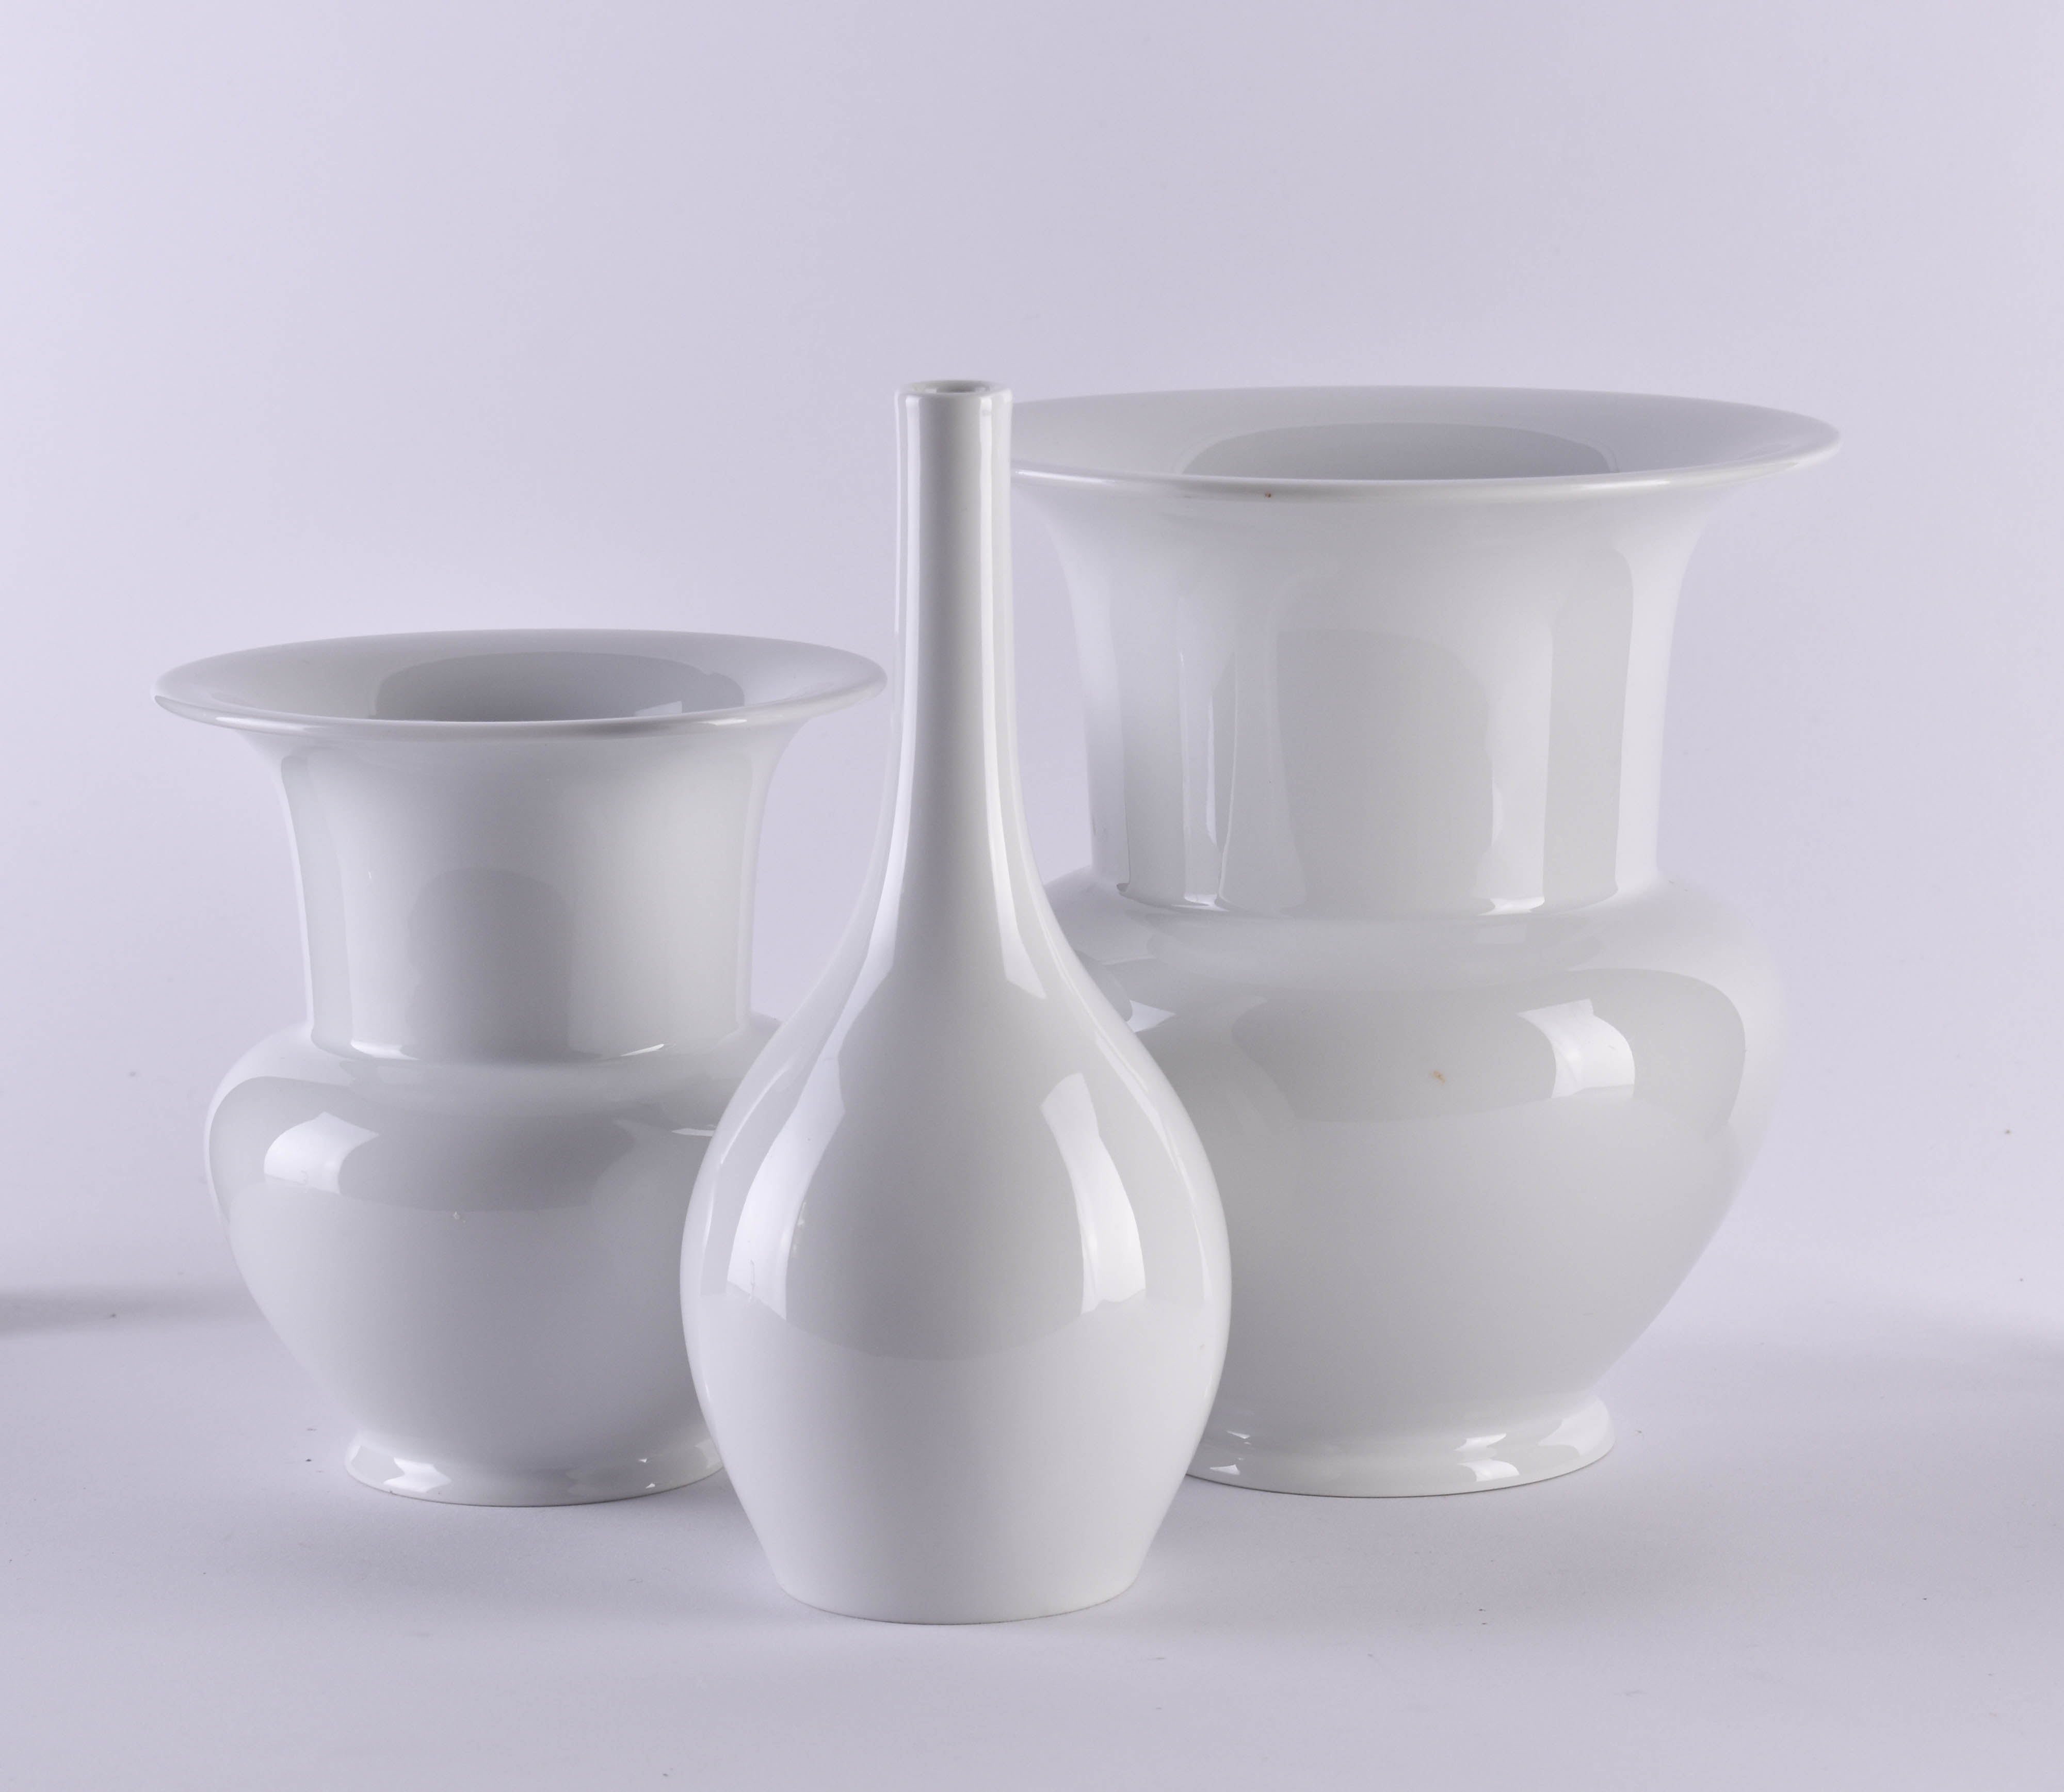 3 vases KPM Berlin - Image 2 of 3